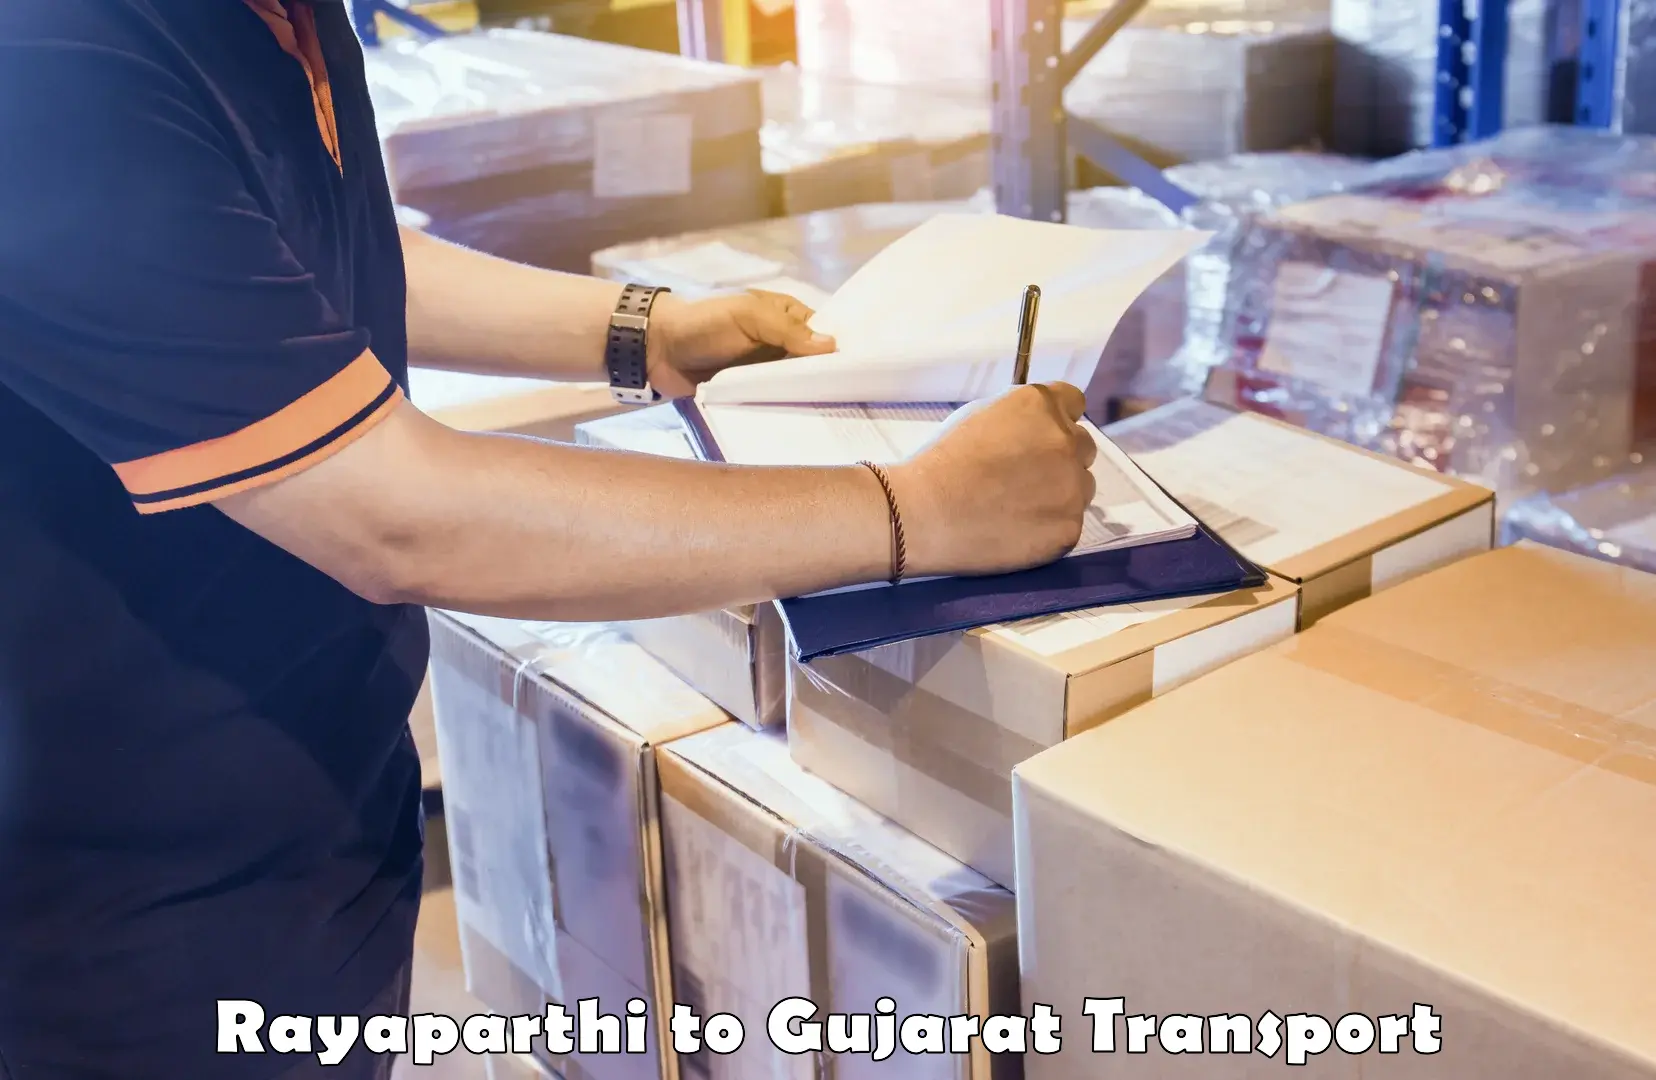 Transport shared services Rayaparthi to Surat